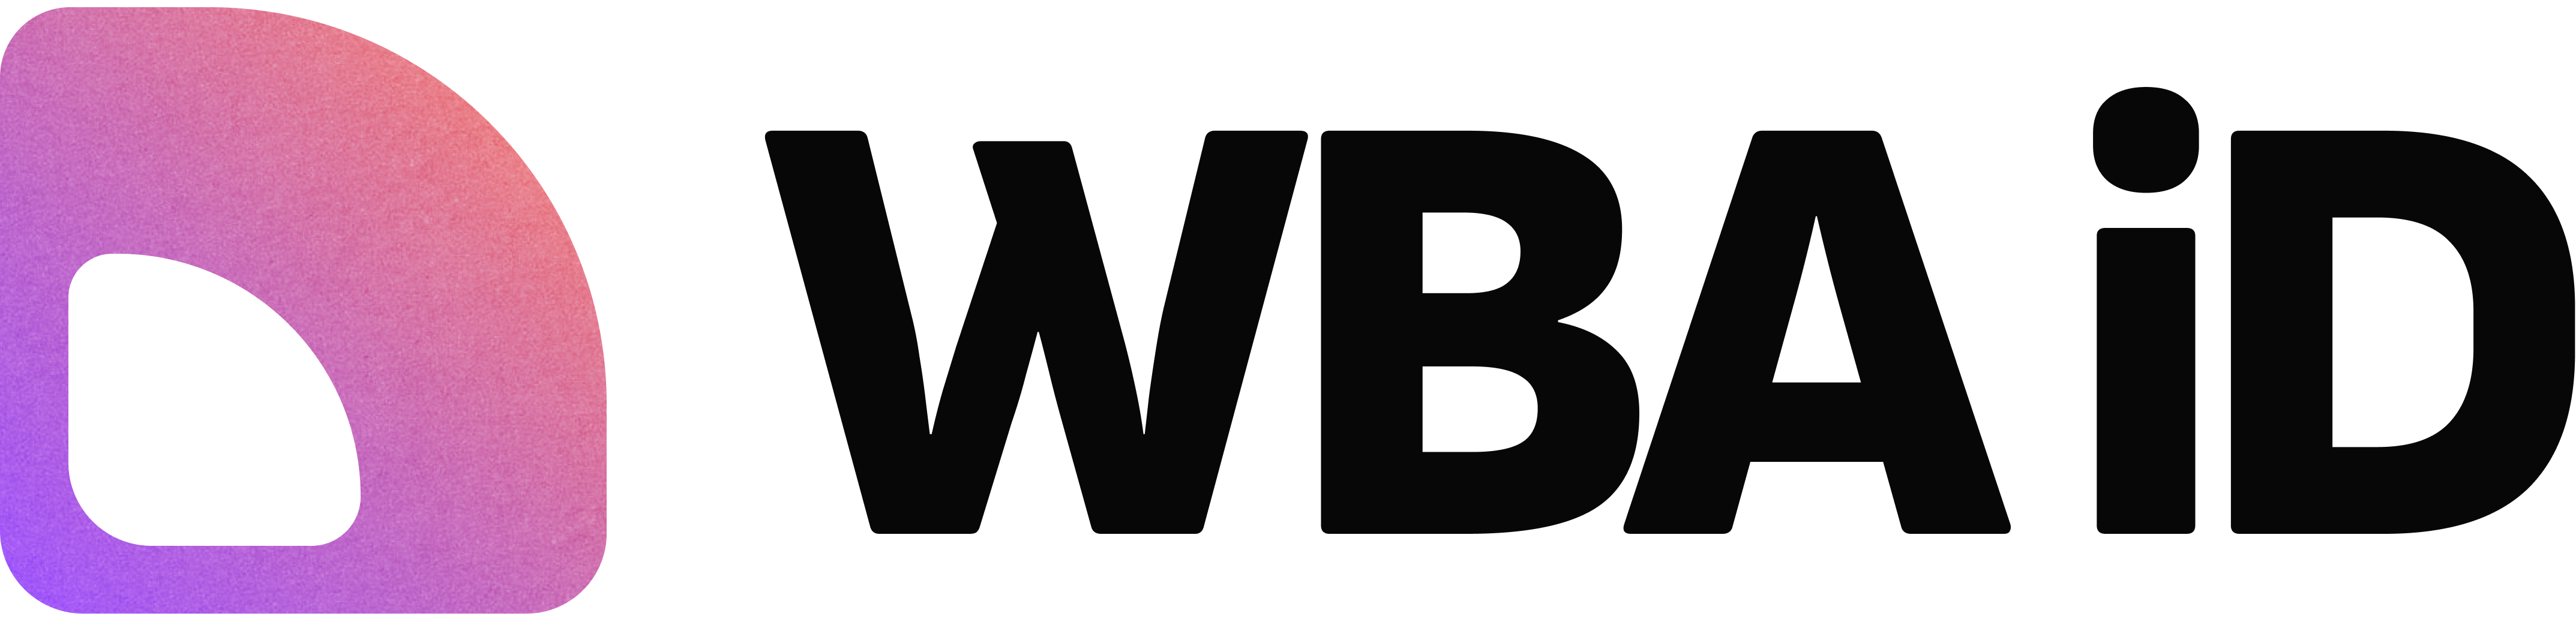 Webba_png_logo